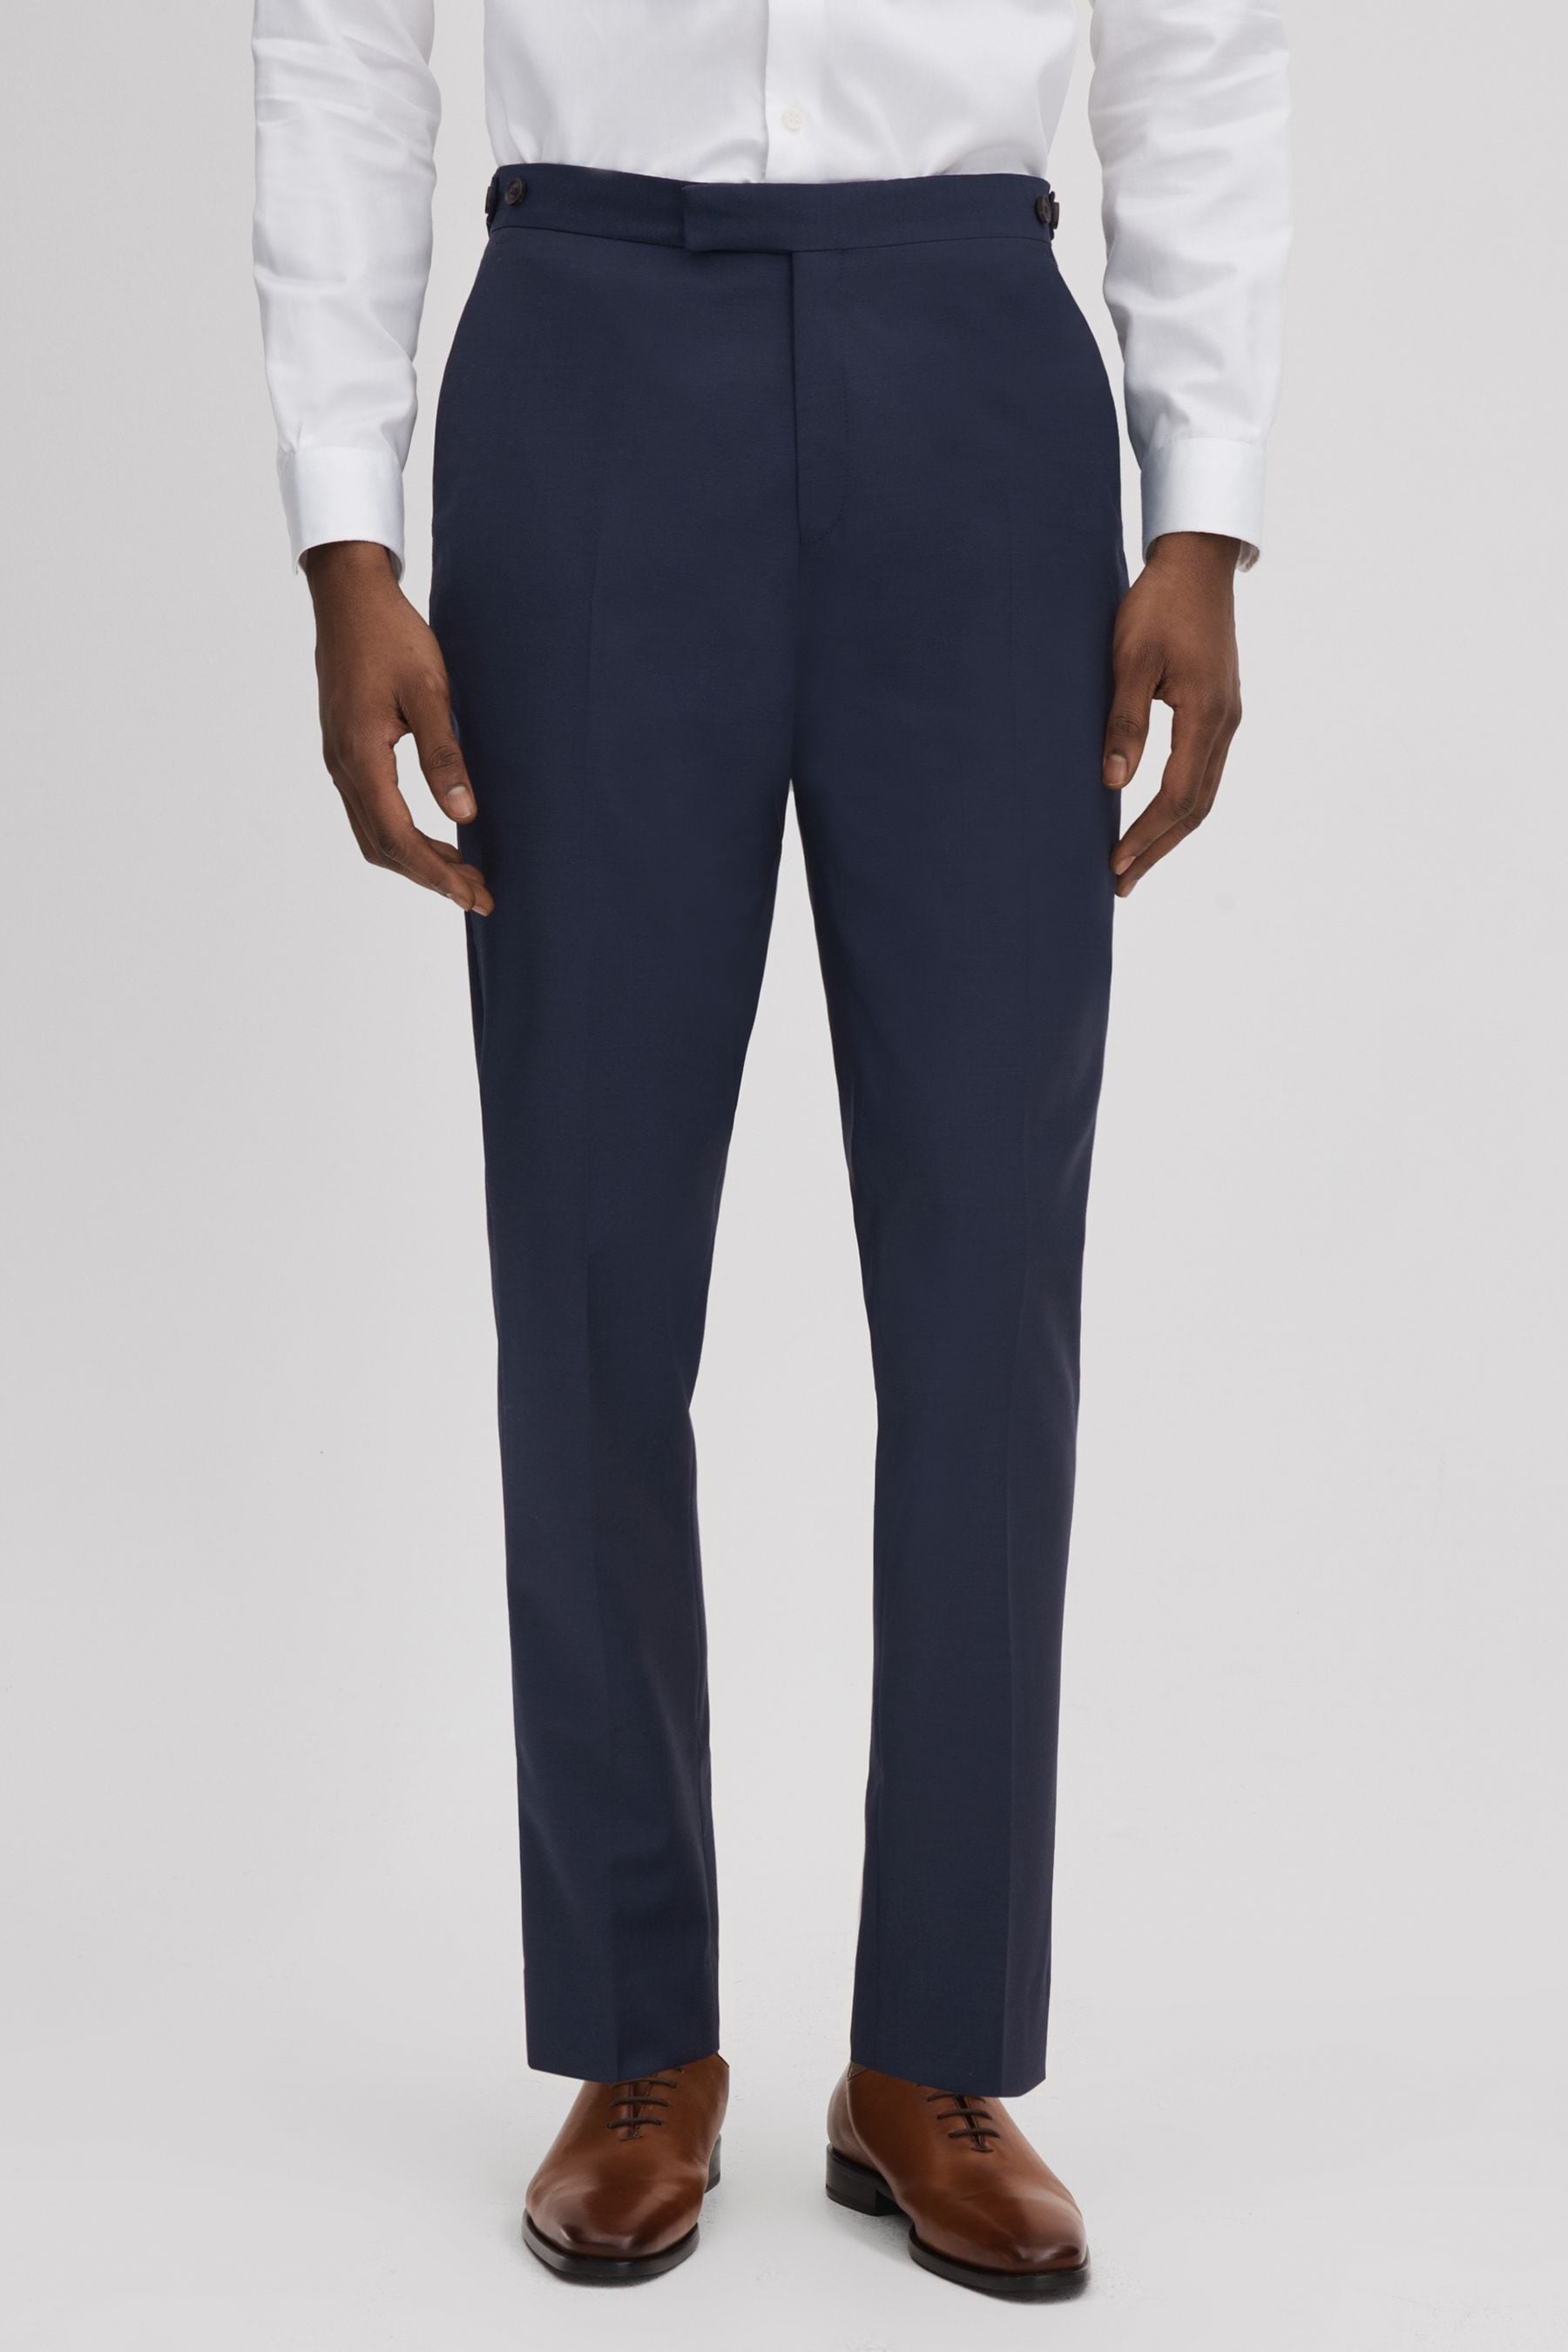 Reiss Destiny - Navy Wool Side Adjuster Trousers, 32